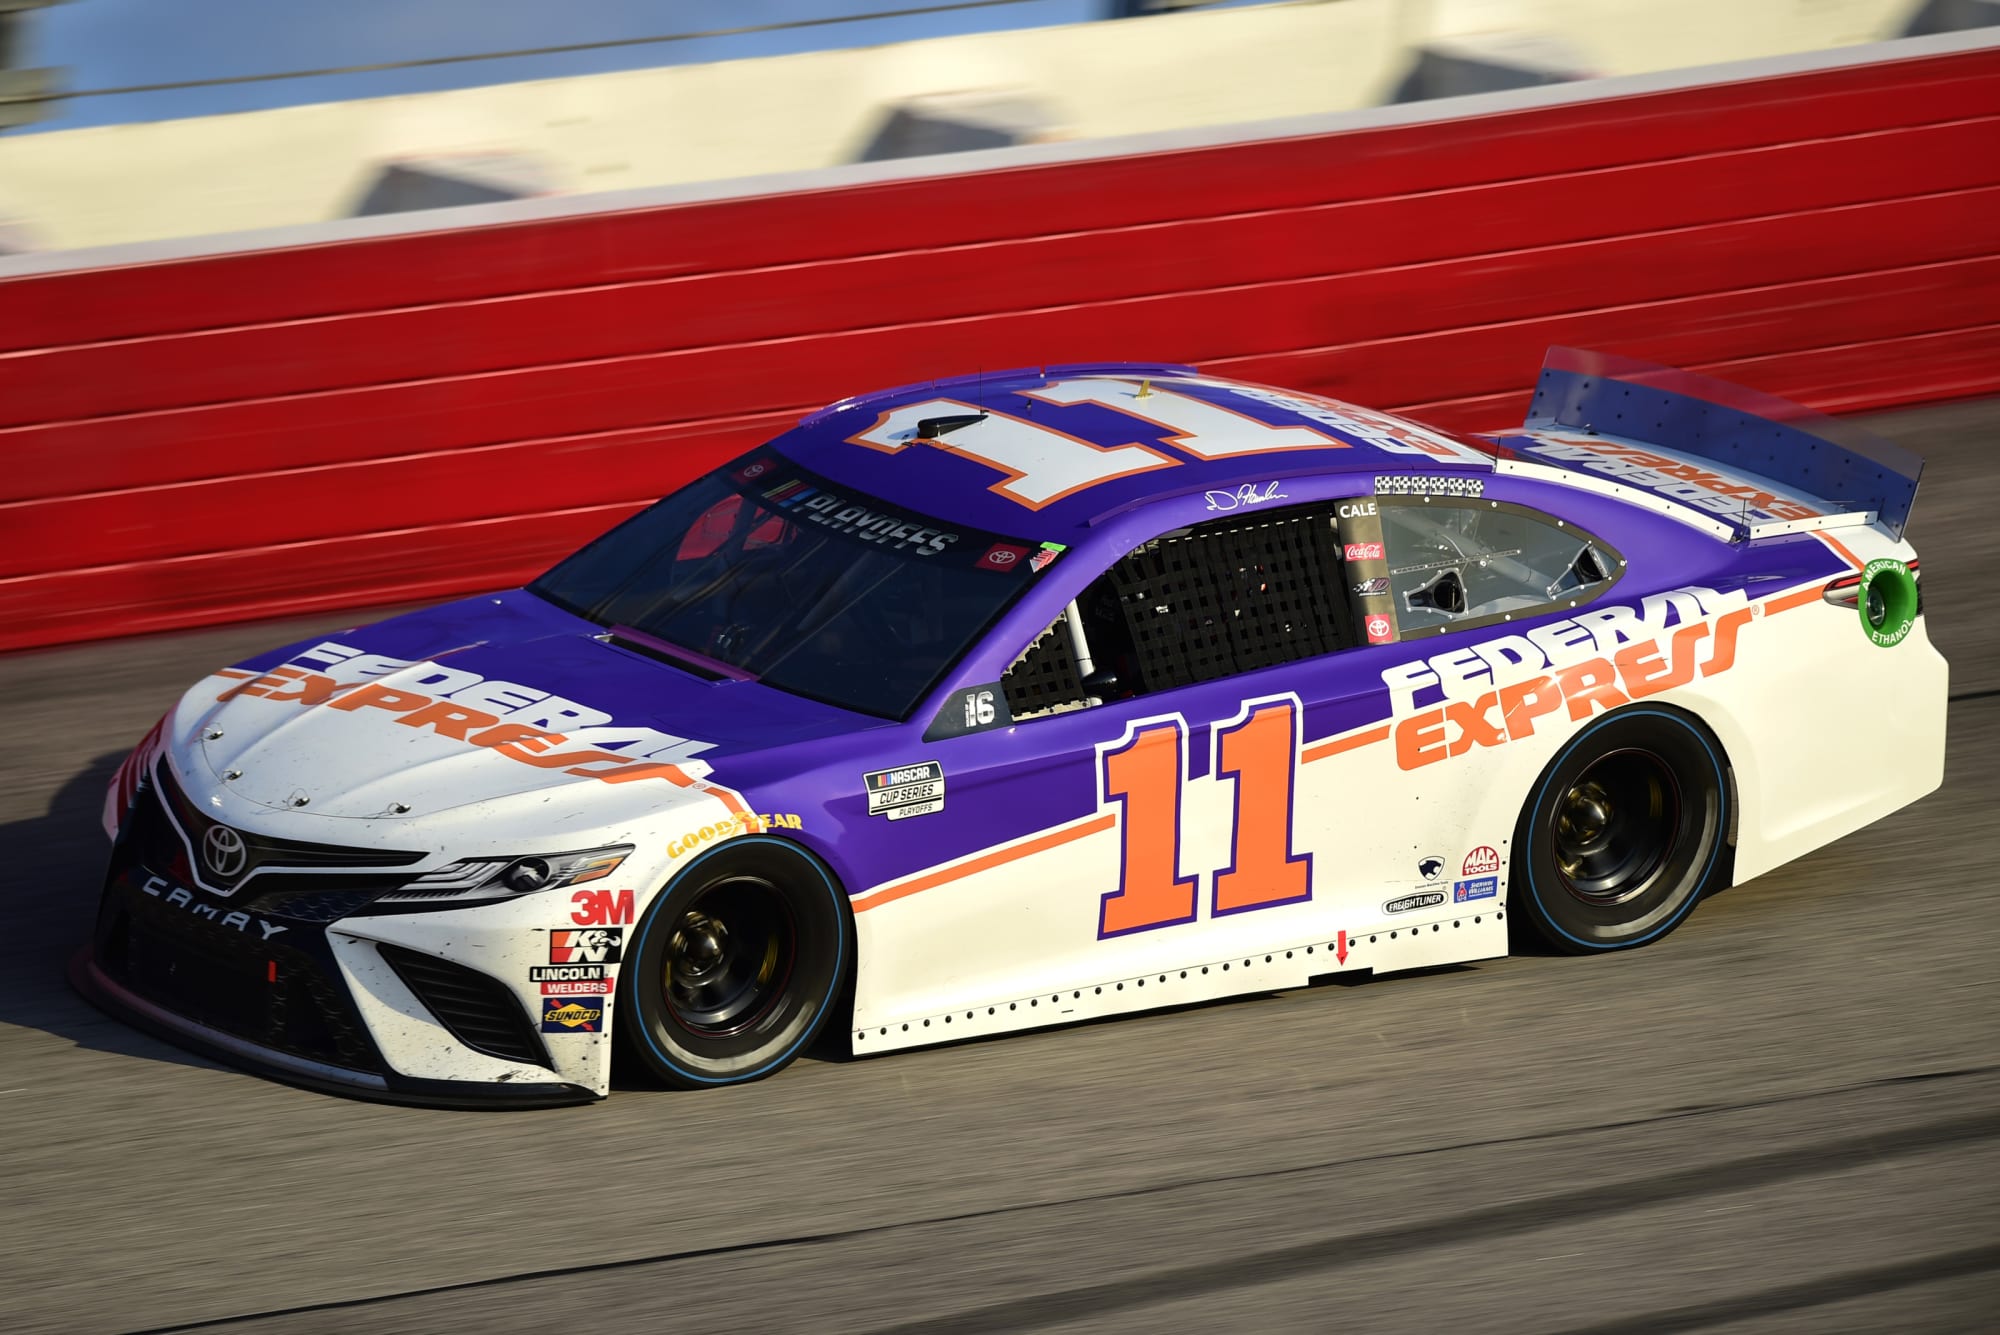 NASCAR Denny Hamlin to run another special paint scheme at Richmond